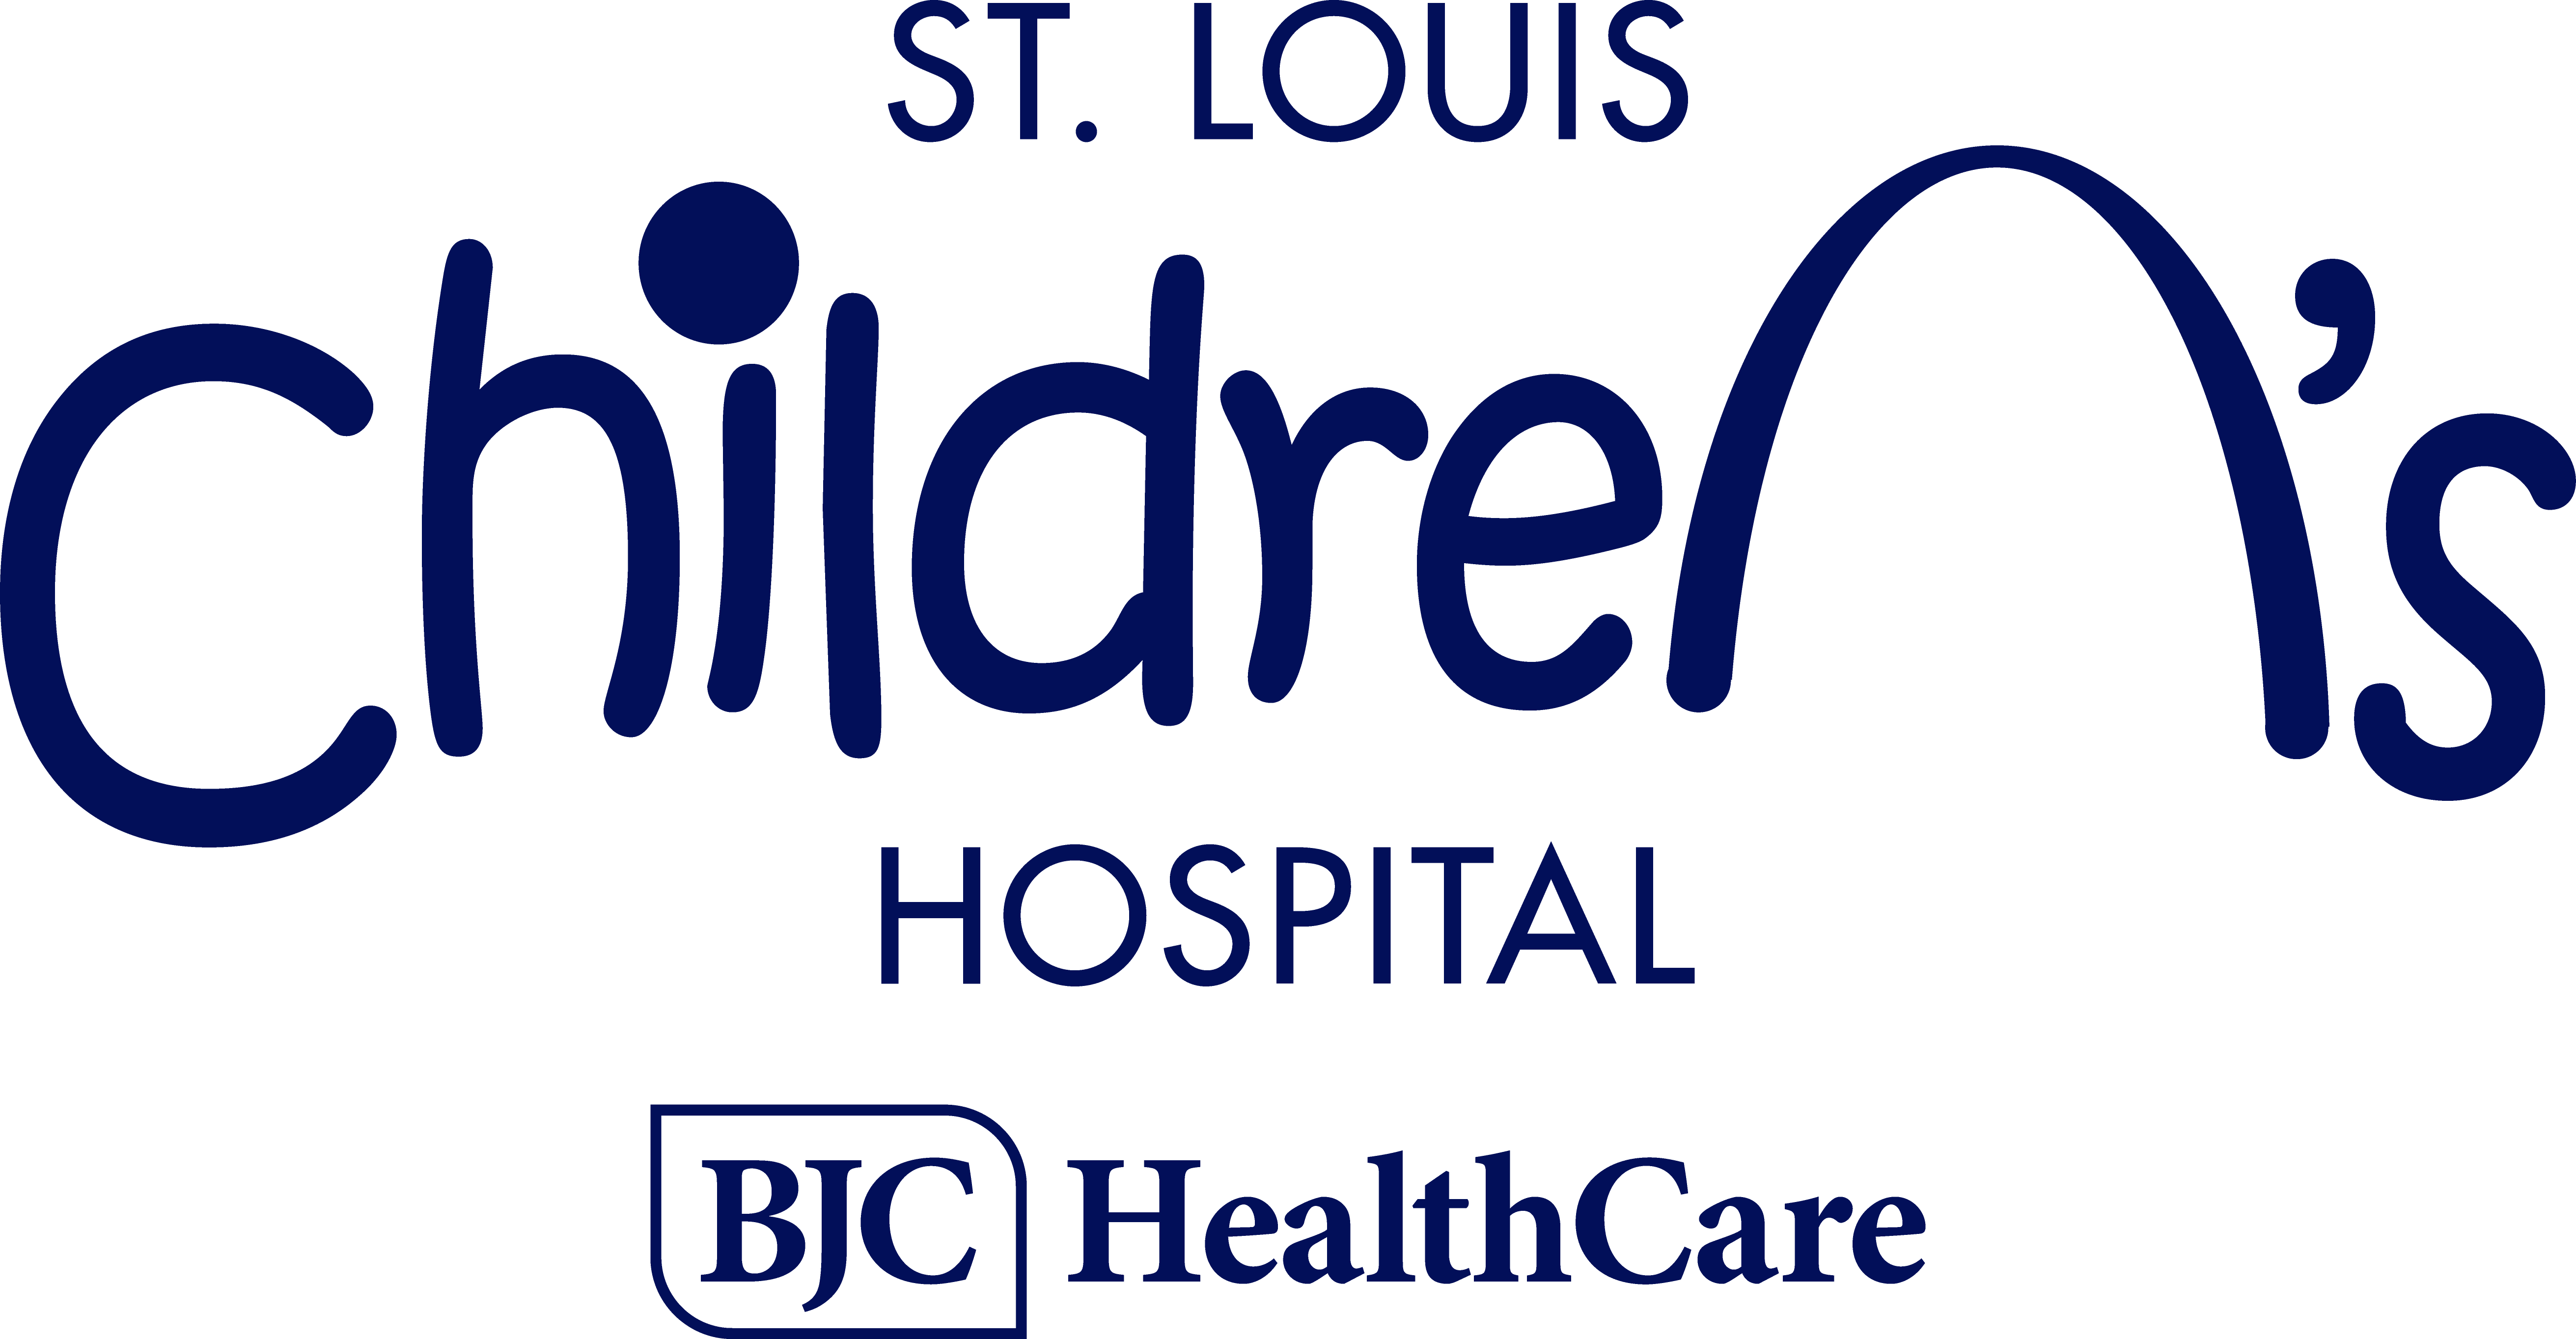 St. Louis Children's Hospital Foundation